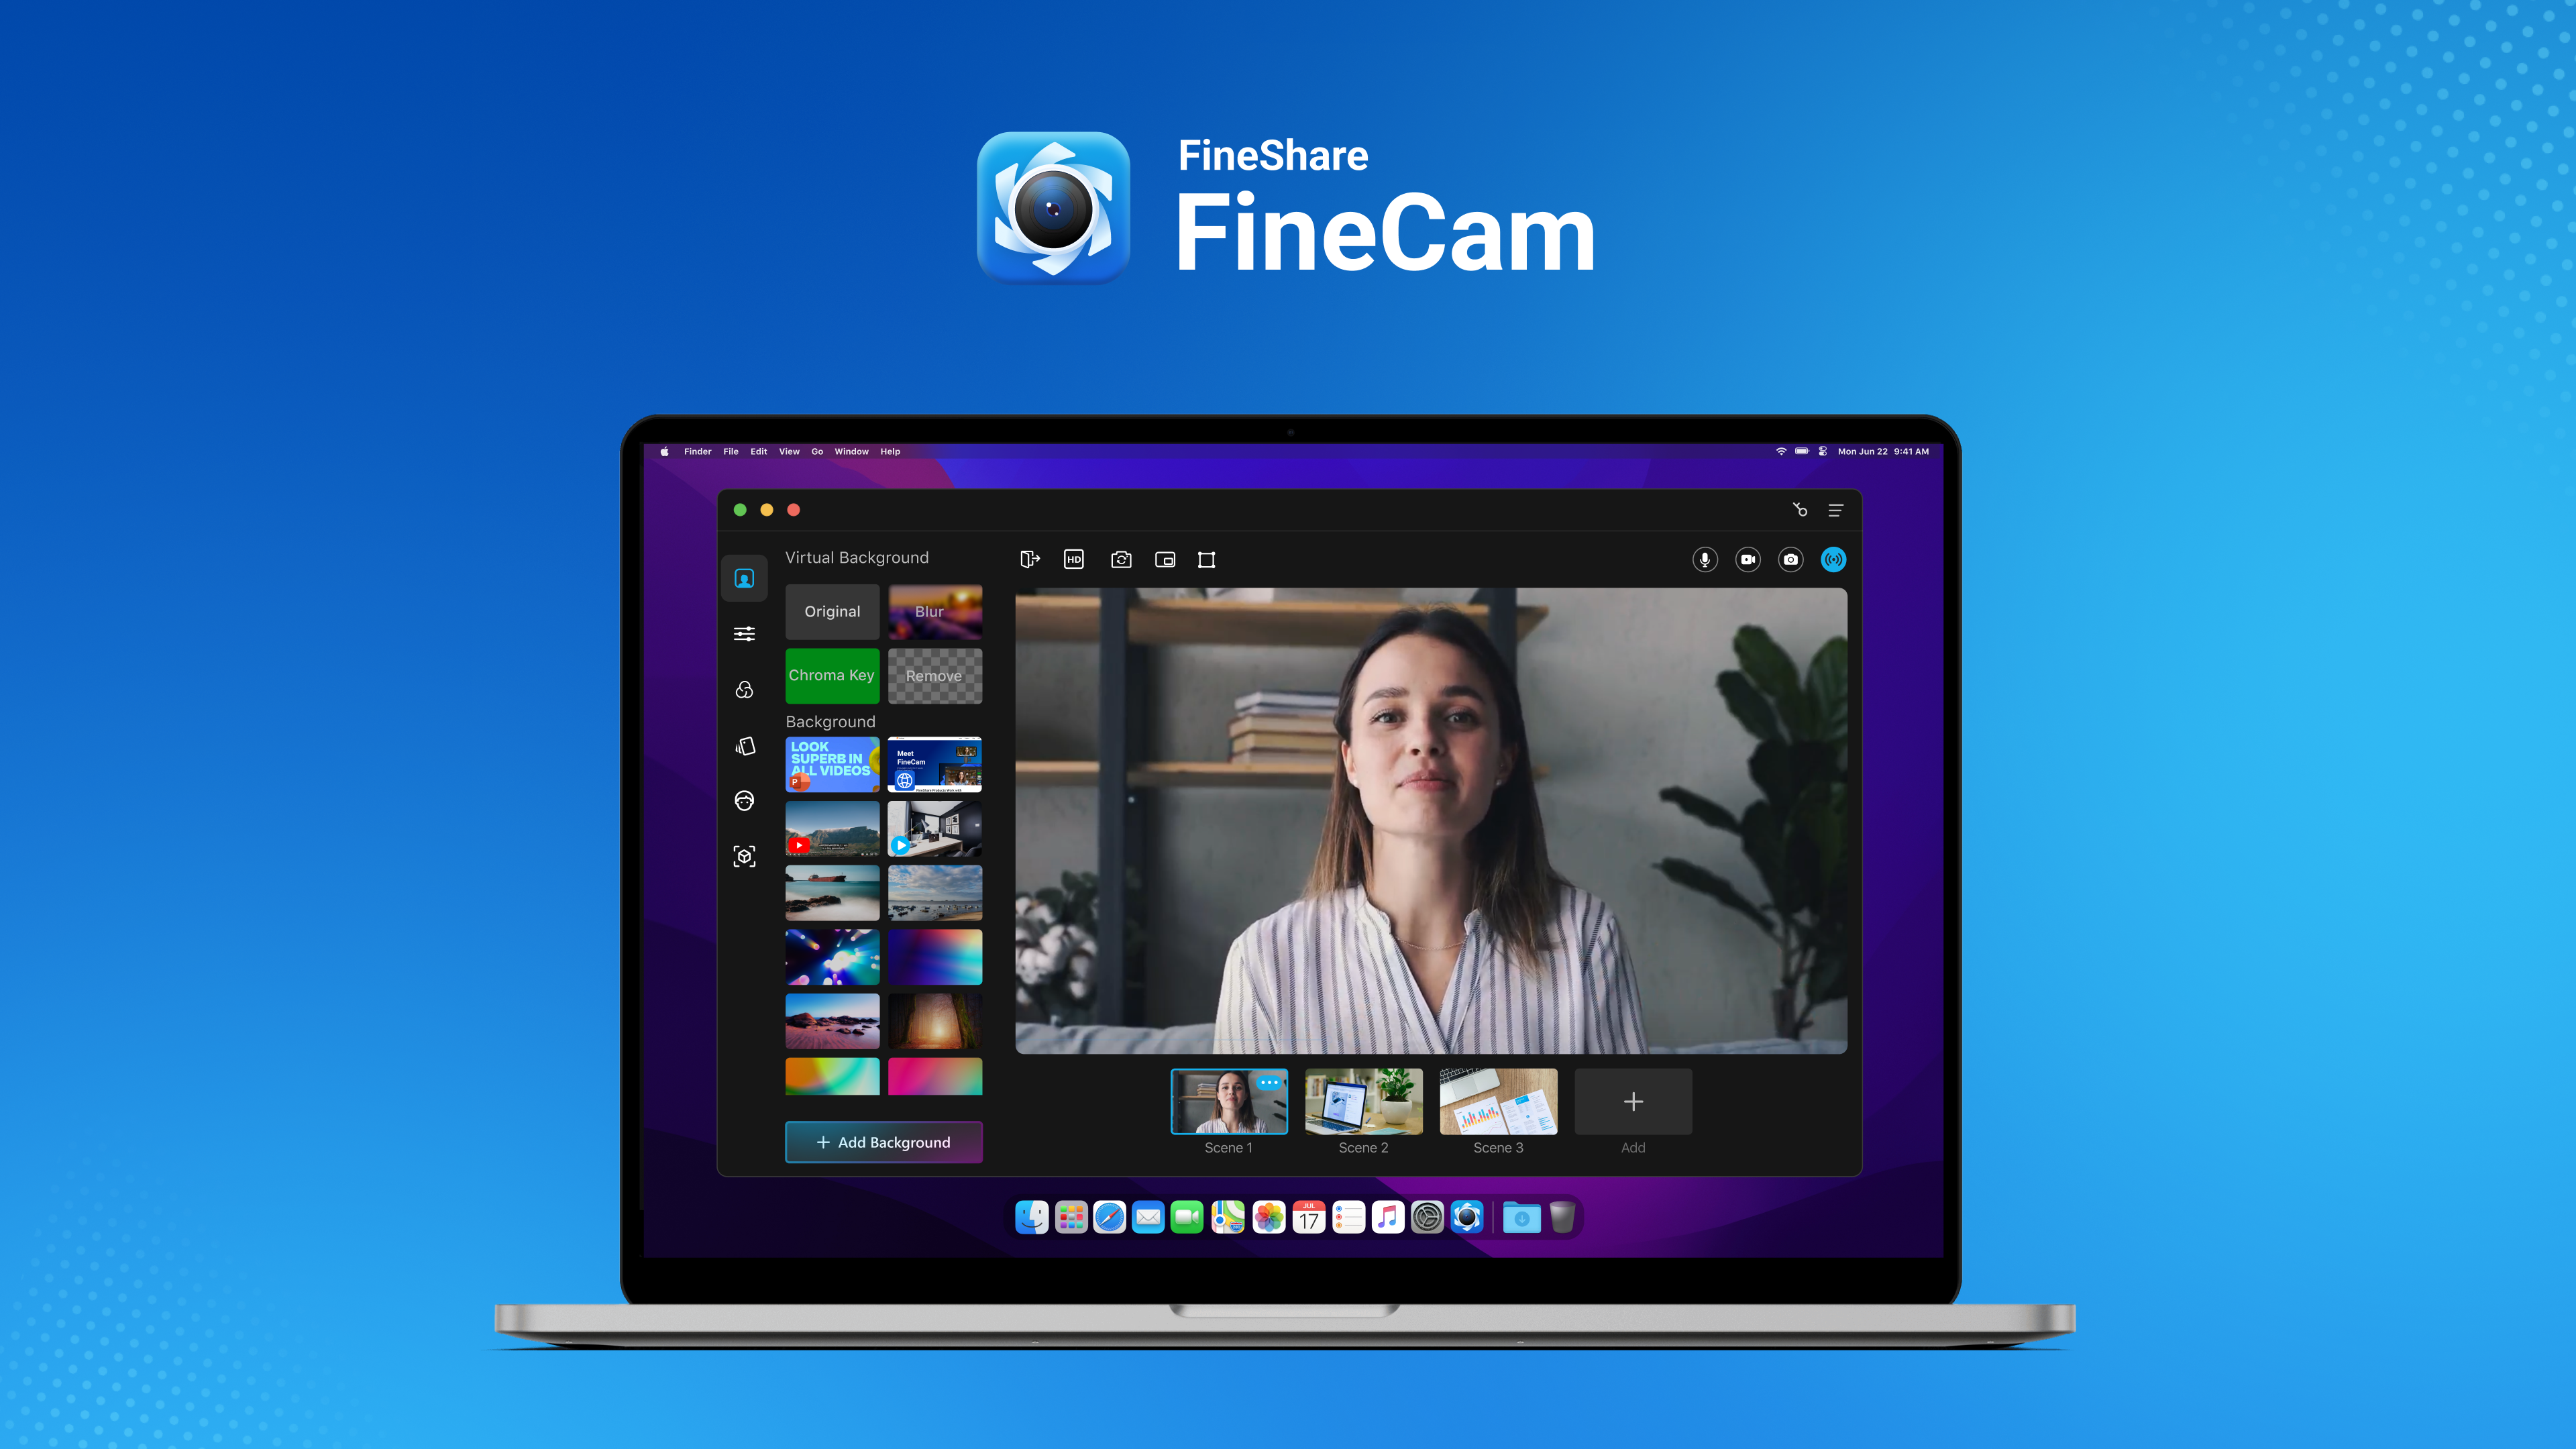 Windows 7 FineShare FineCam 1.5.0 full